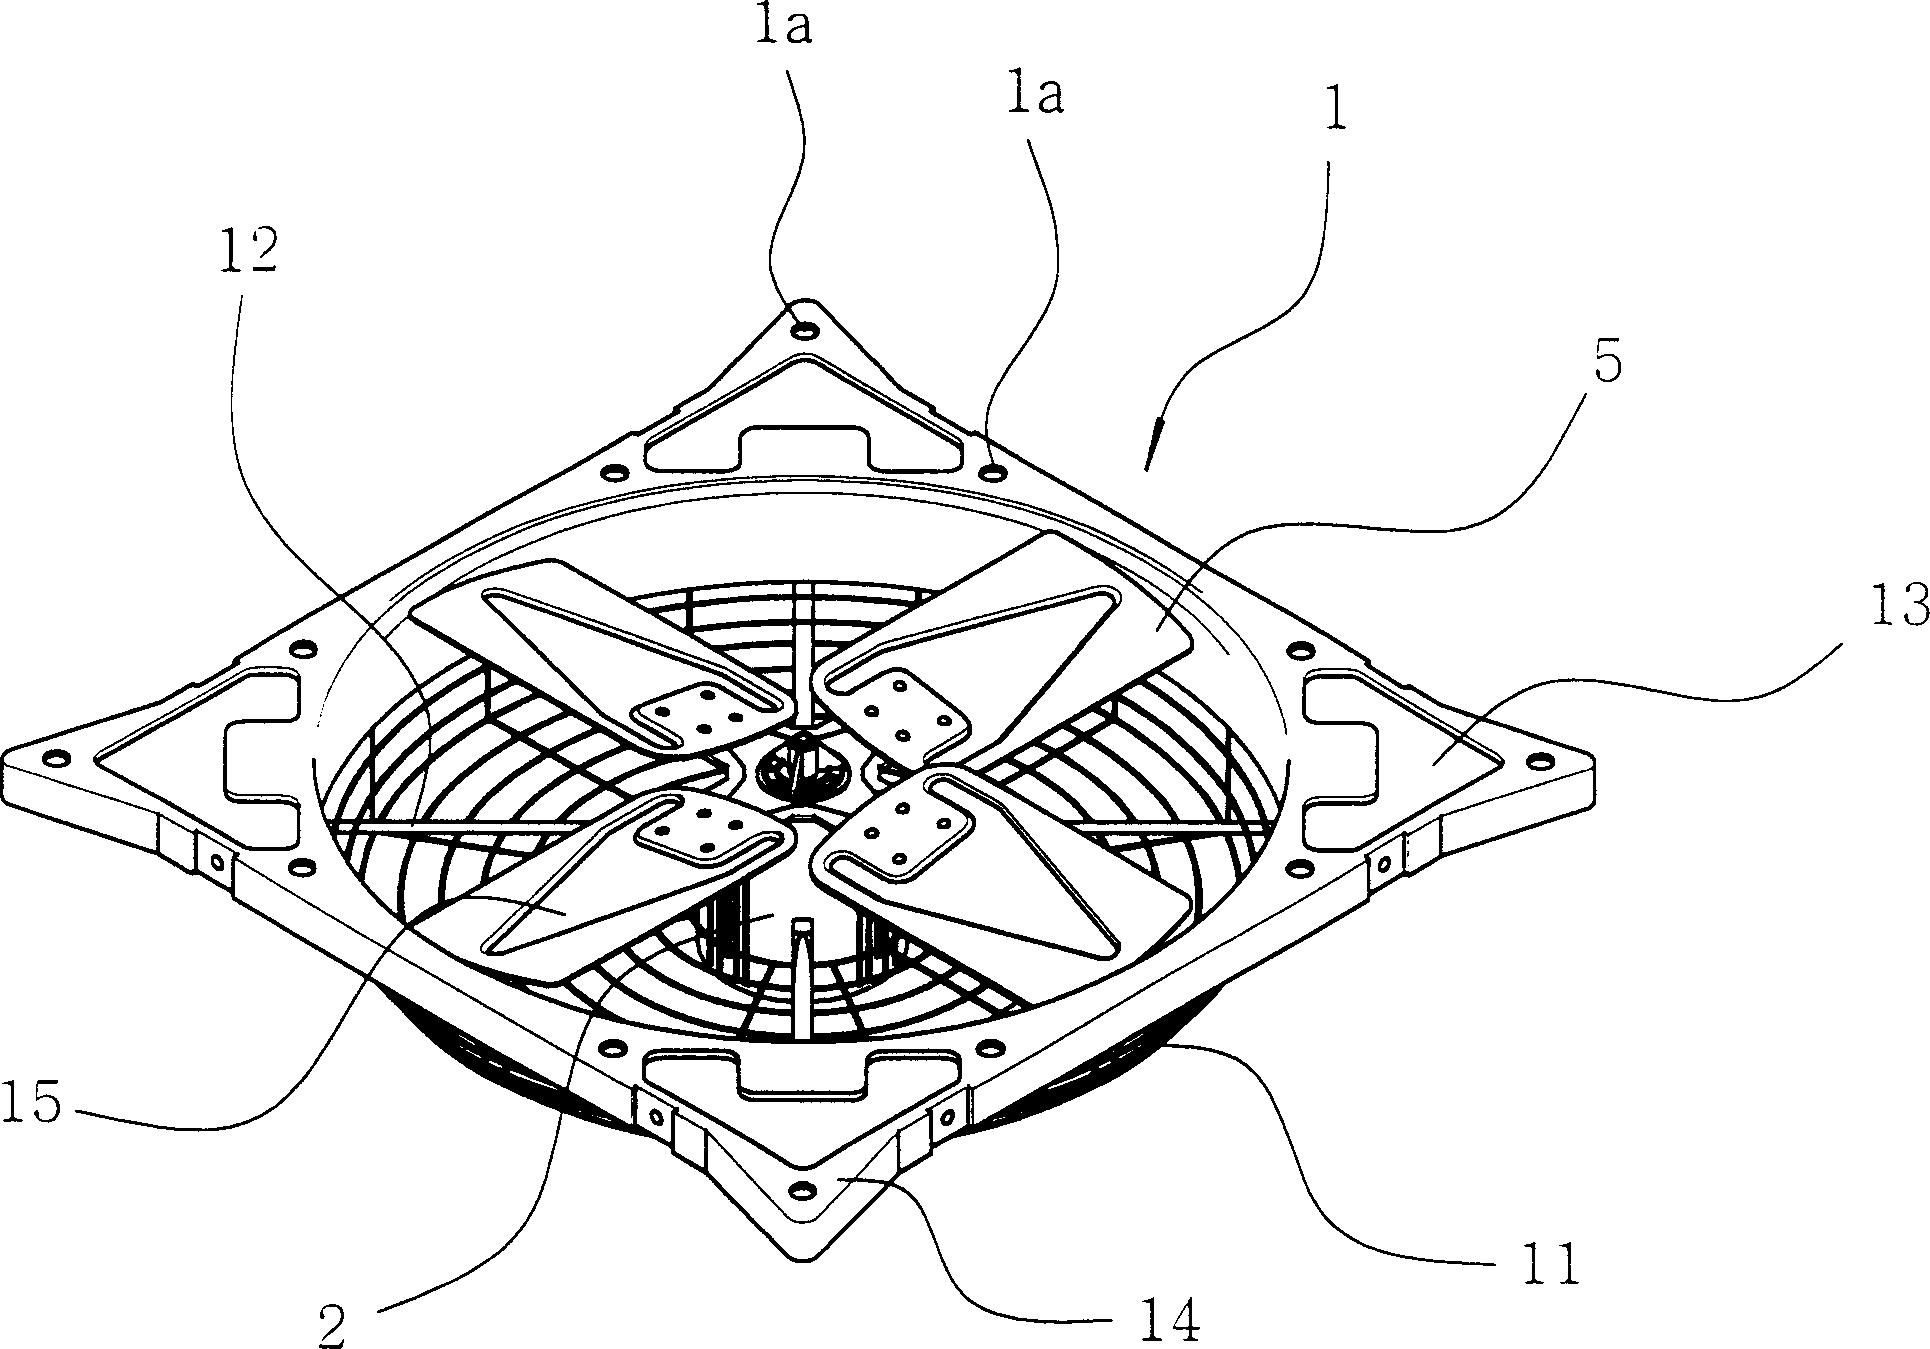 Exhaust fan structure of livestock pen